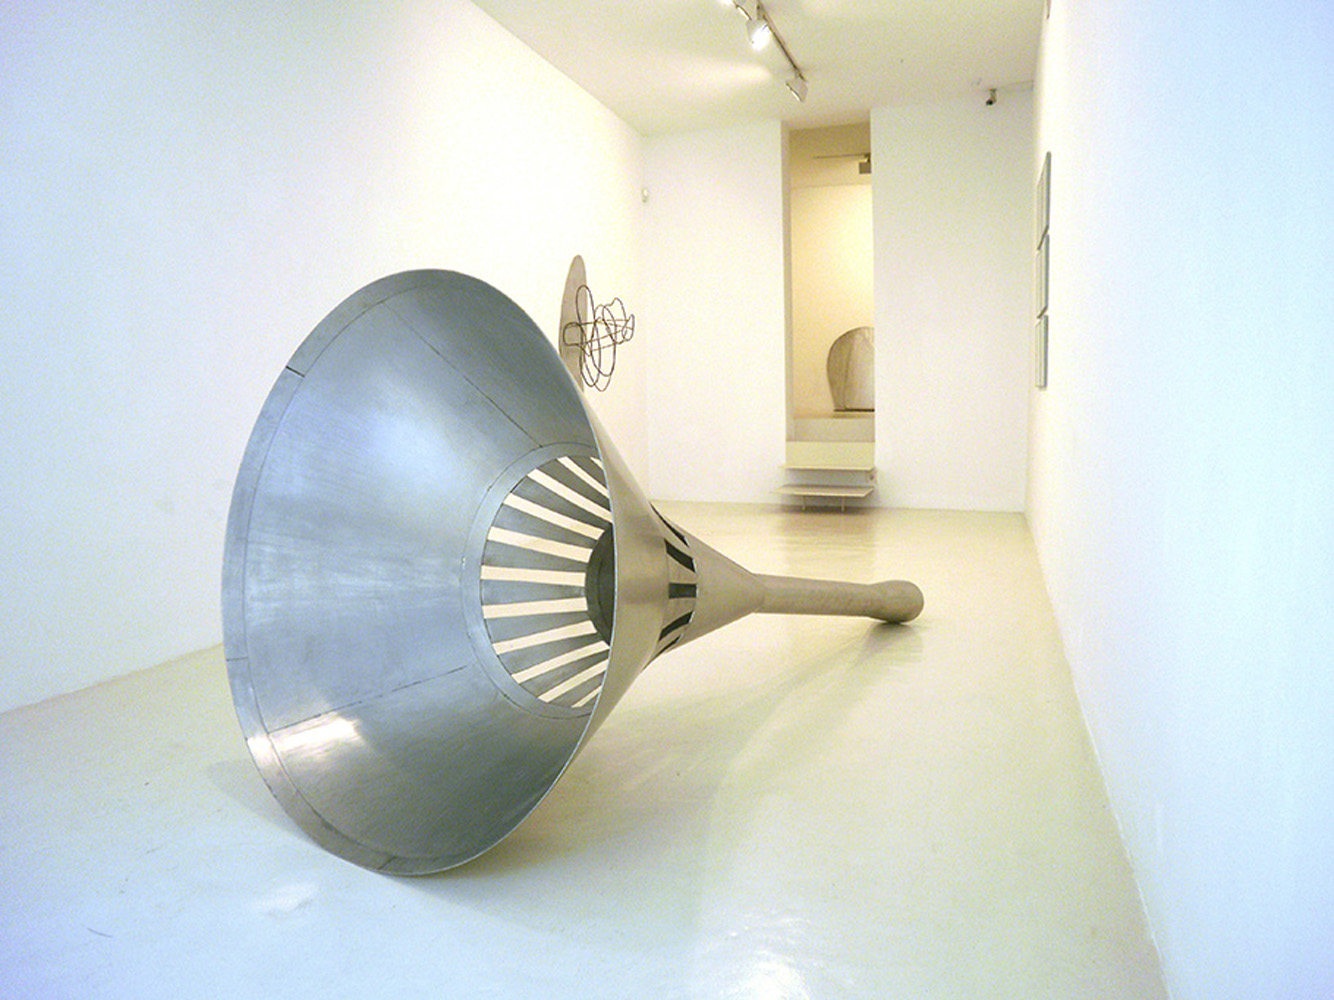 'Baalbek III', 2008, stainless steel, 139 x 294 x 139 cm. Galeria Maior Palma, 2010.